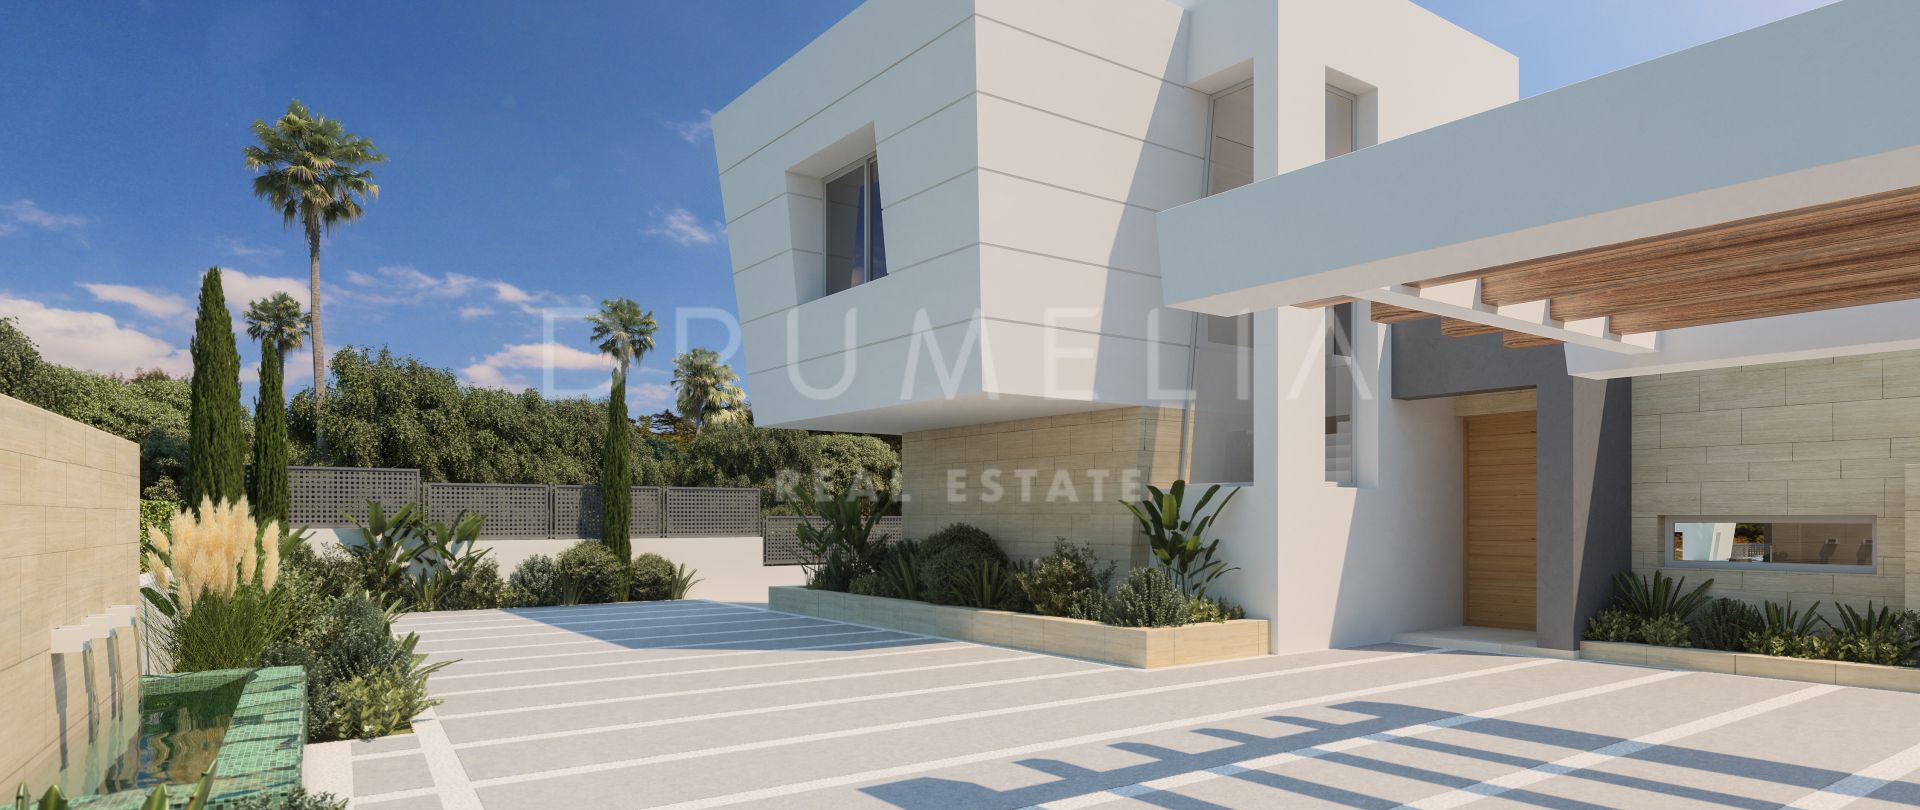 Magnífica parcela con proyecto de villa moderna de alta gama en Rocío de Nagüeles, Milla de Oro de Marbella